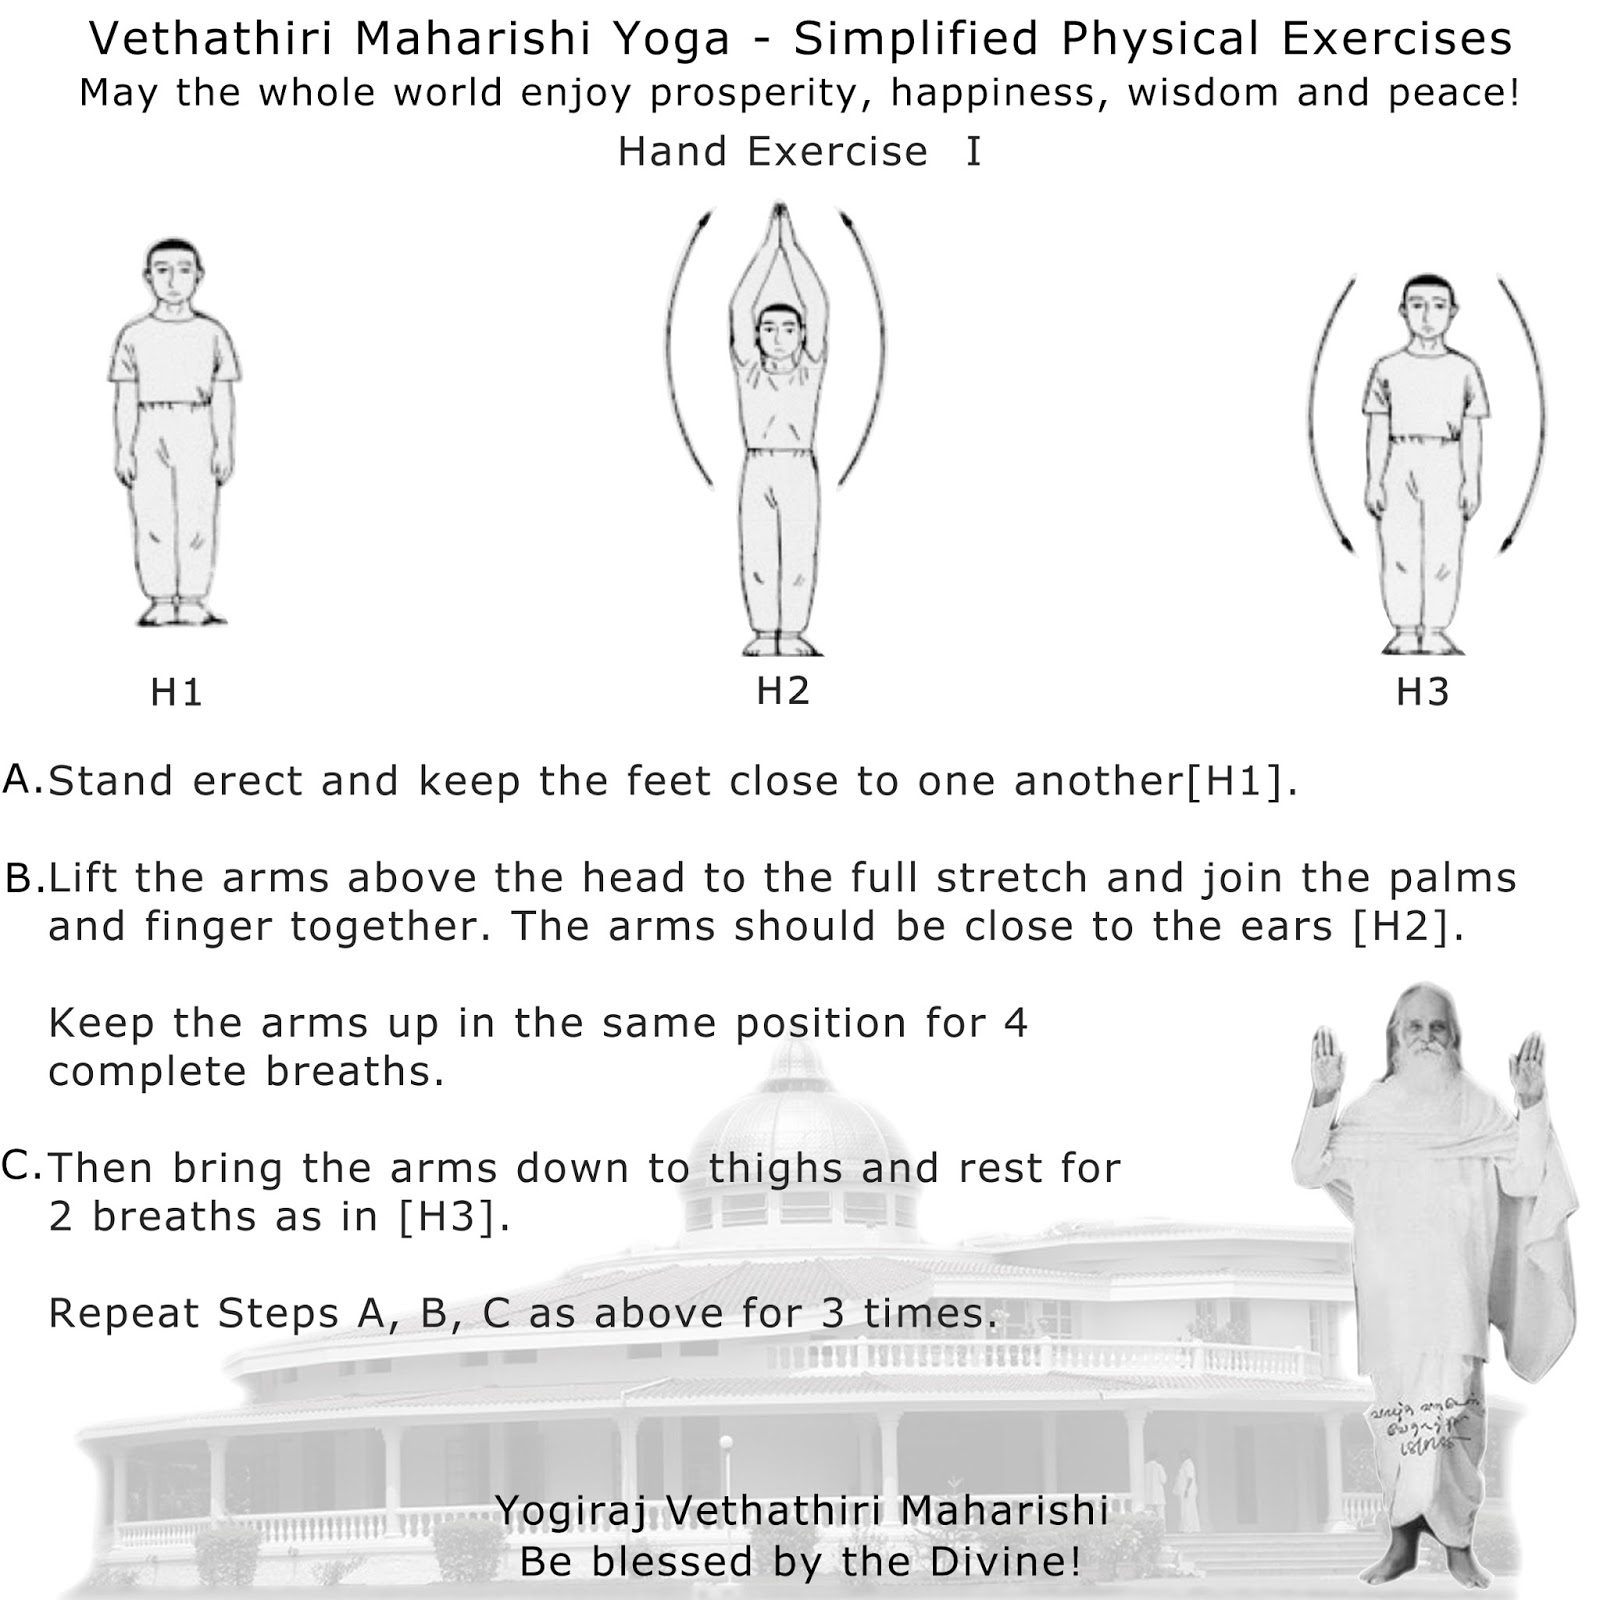 Vethathiri Maharishi Exercise Book Pdf - downzload